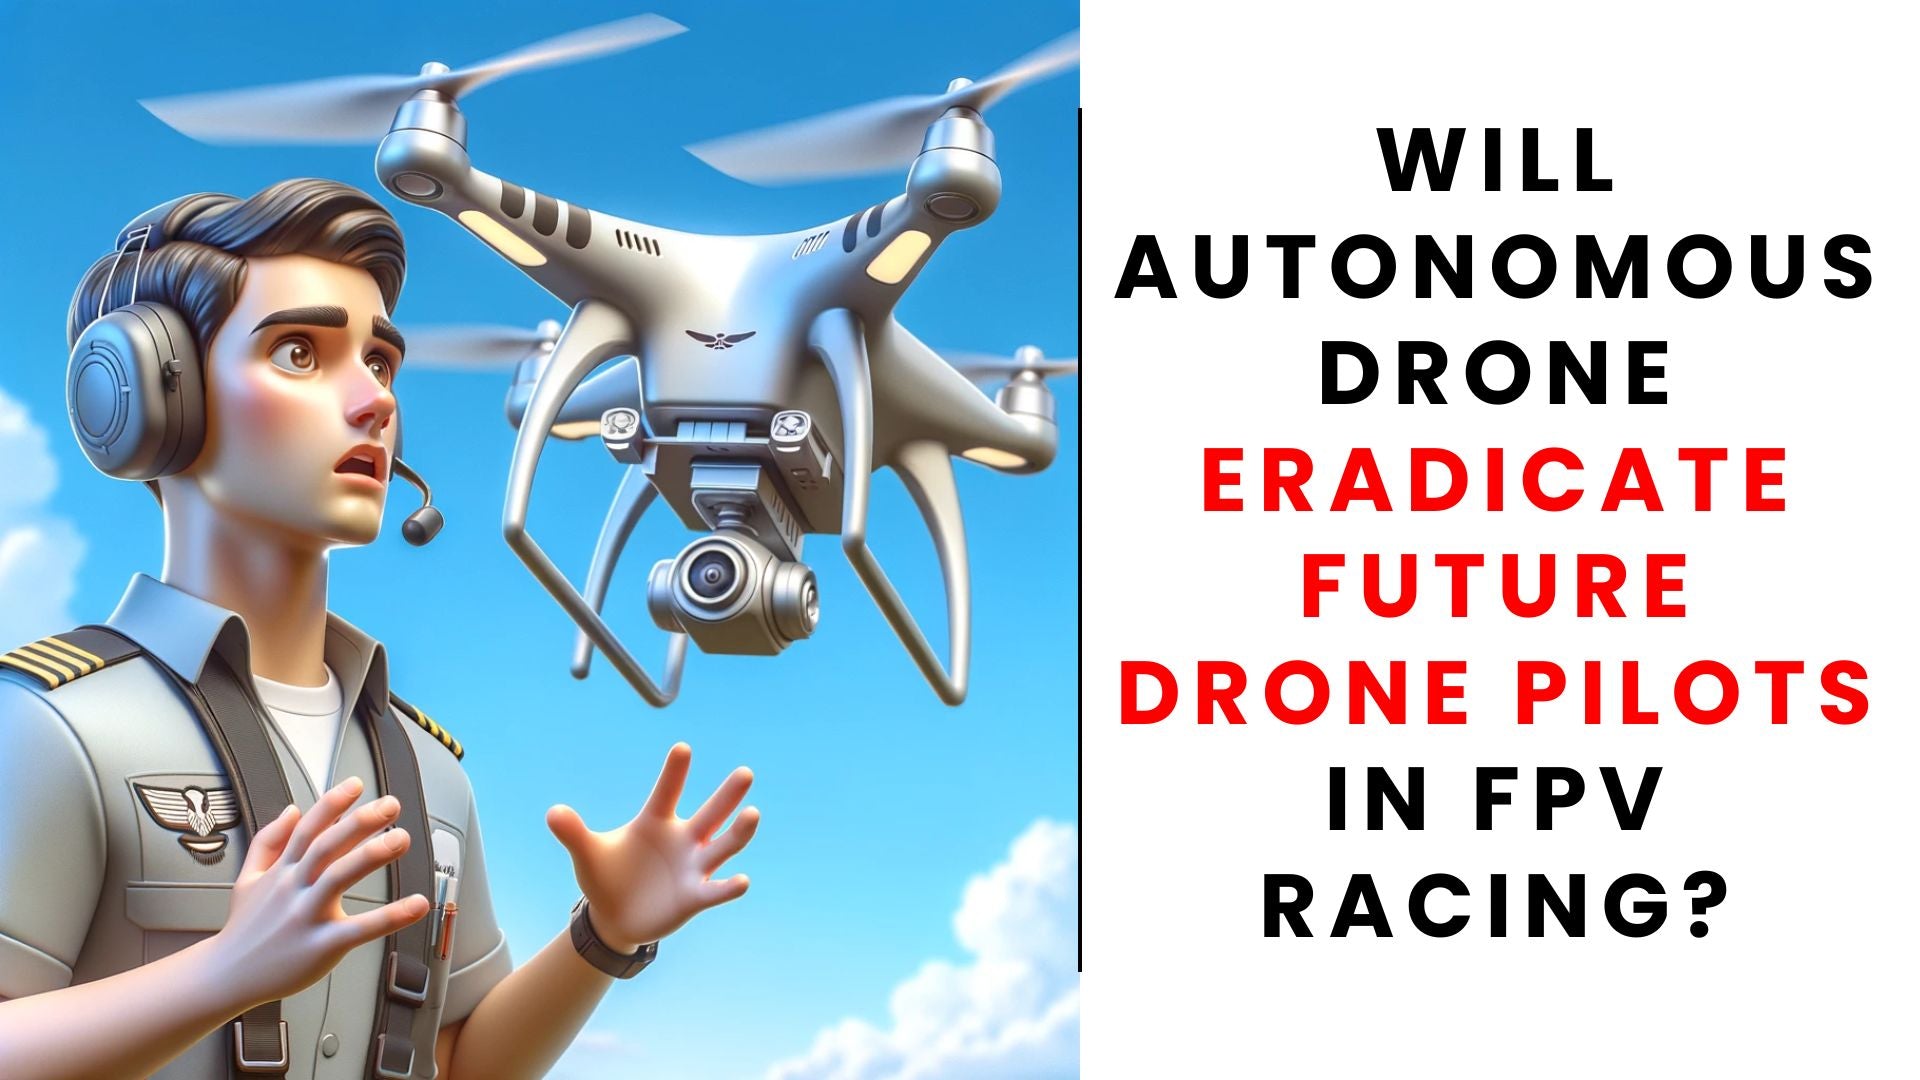 Will Autonomous Drones eradicate future drone pilots in FPV racing?